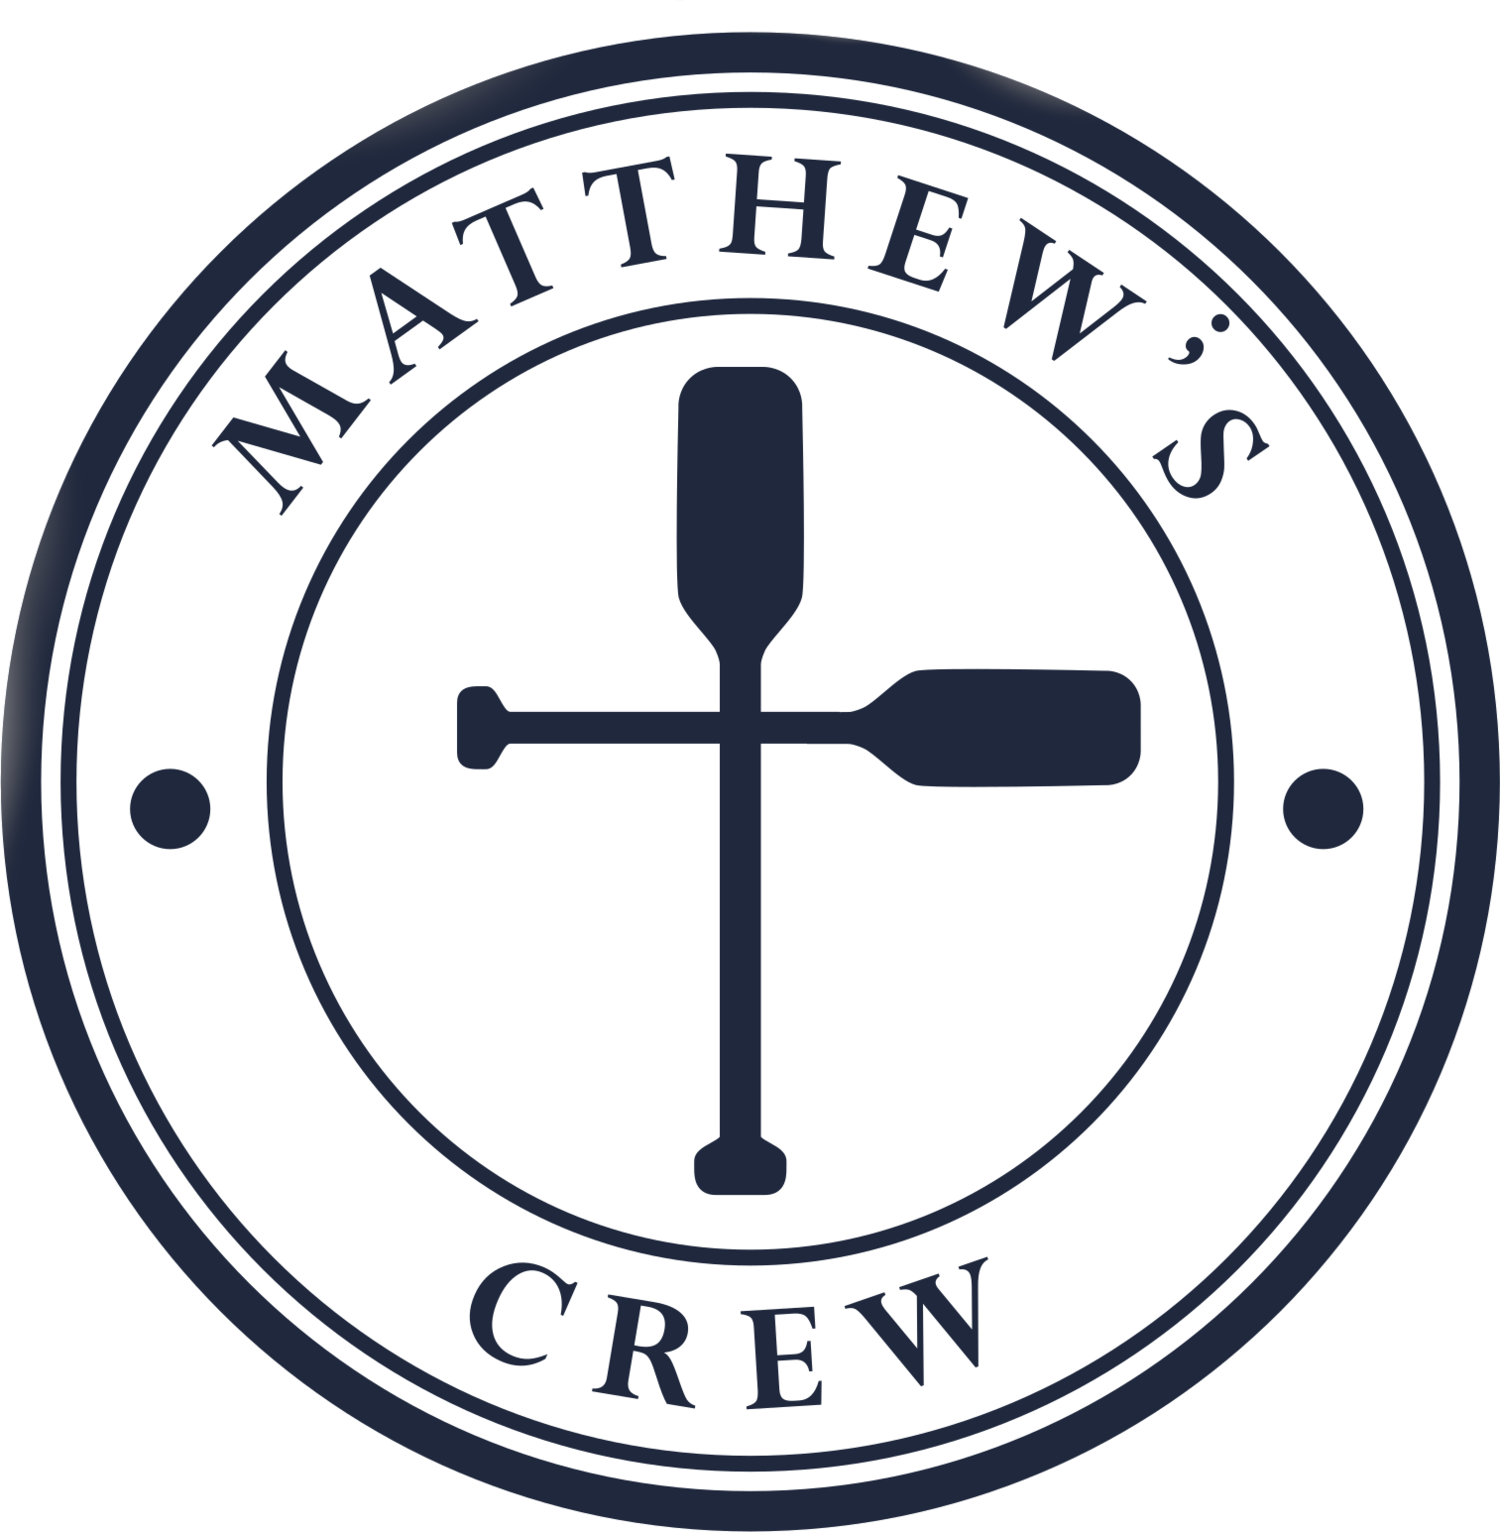 Matthew;s Crew